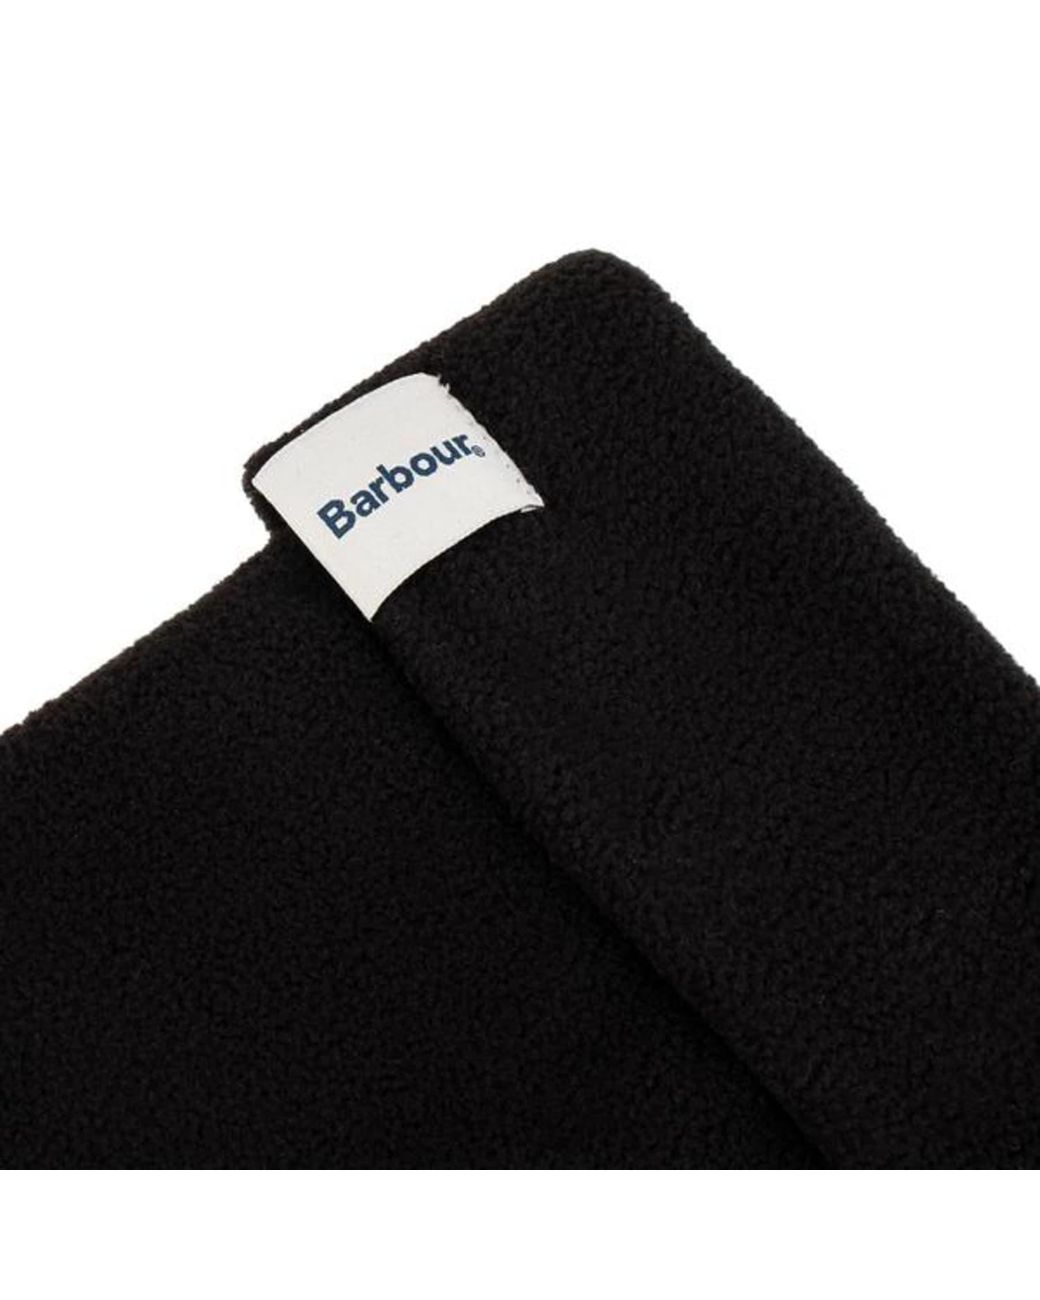 Barbour Synthetic Fleece Wellington Sock Black for Men - Lyst